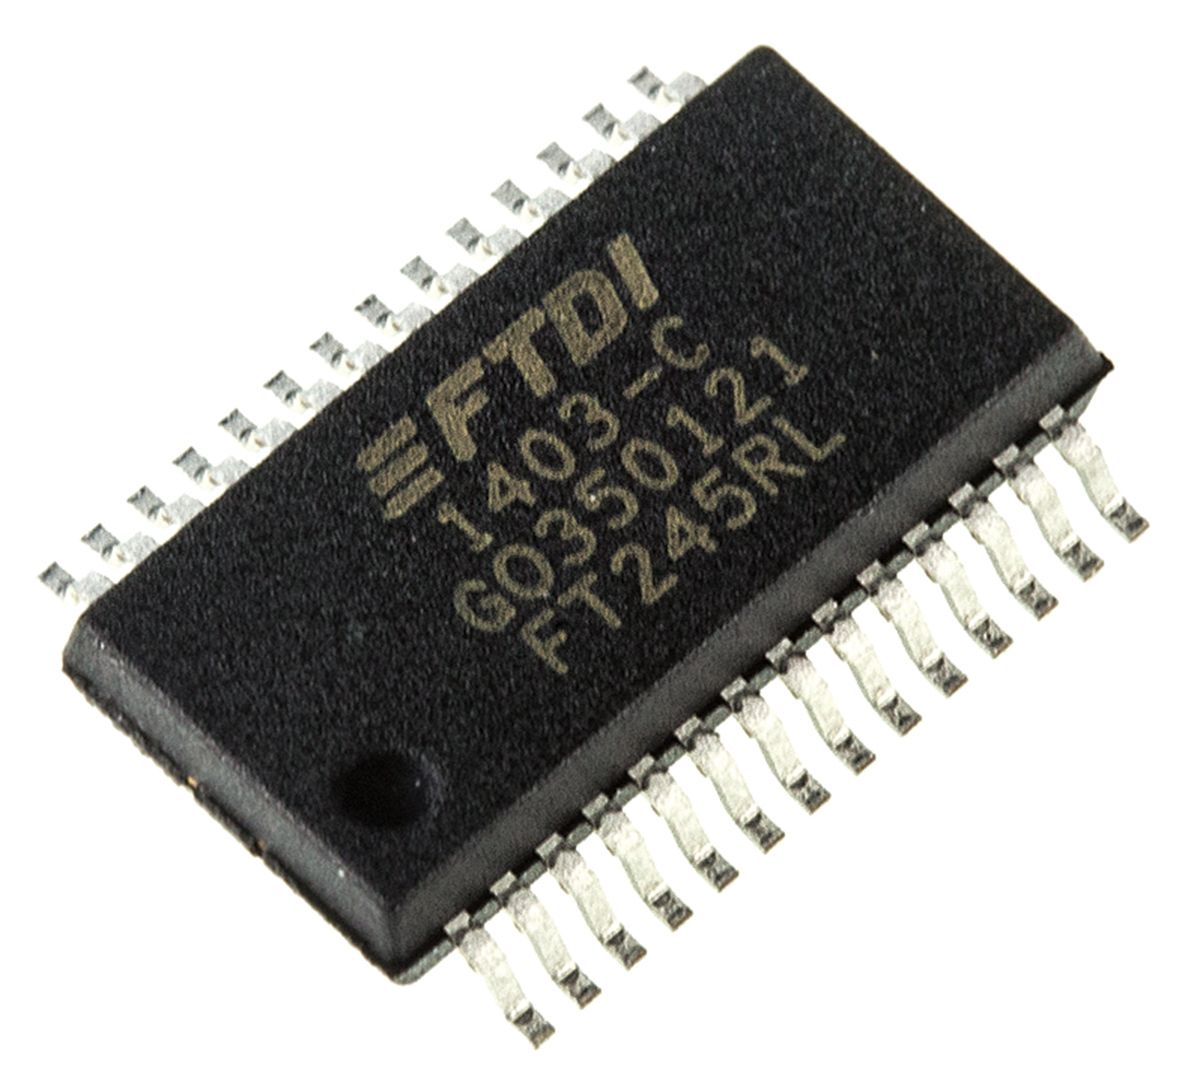 FTDI Chip FT245RL, UART, 28-Pin SSOP